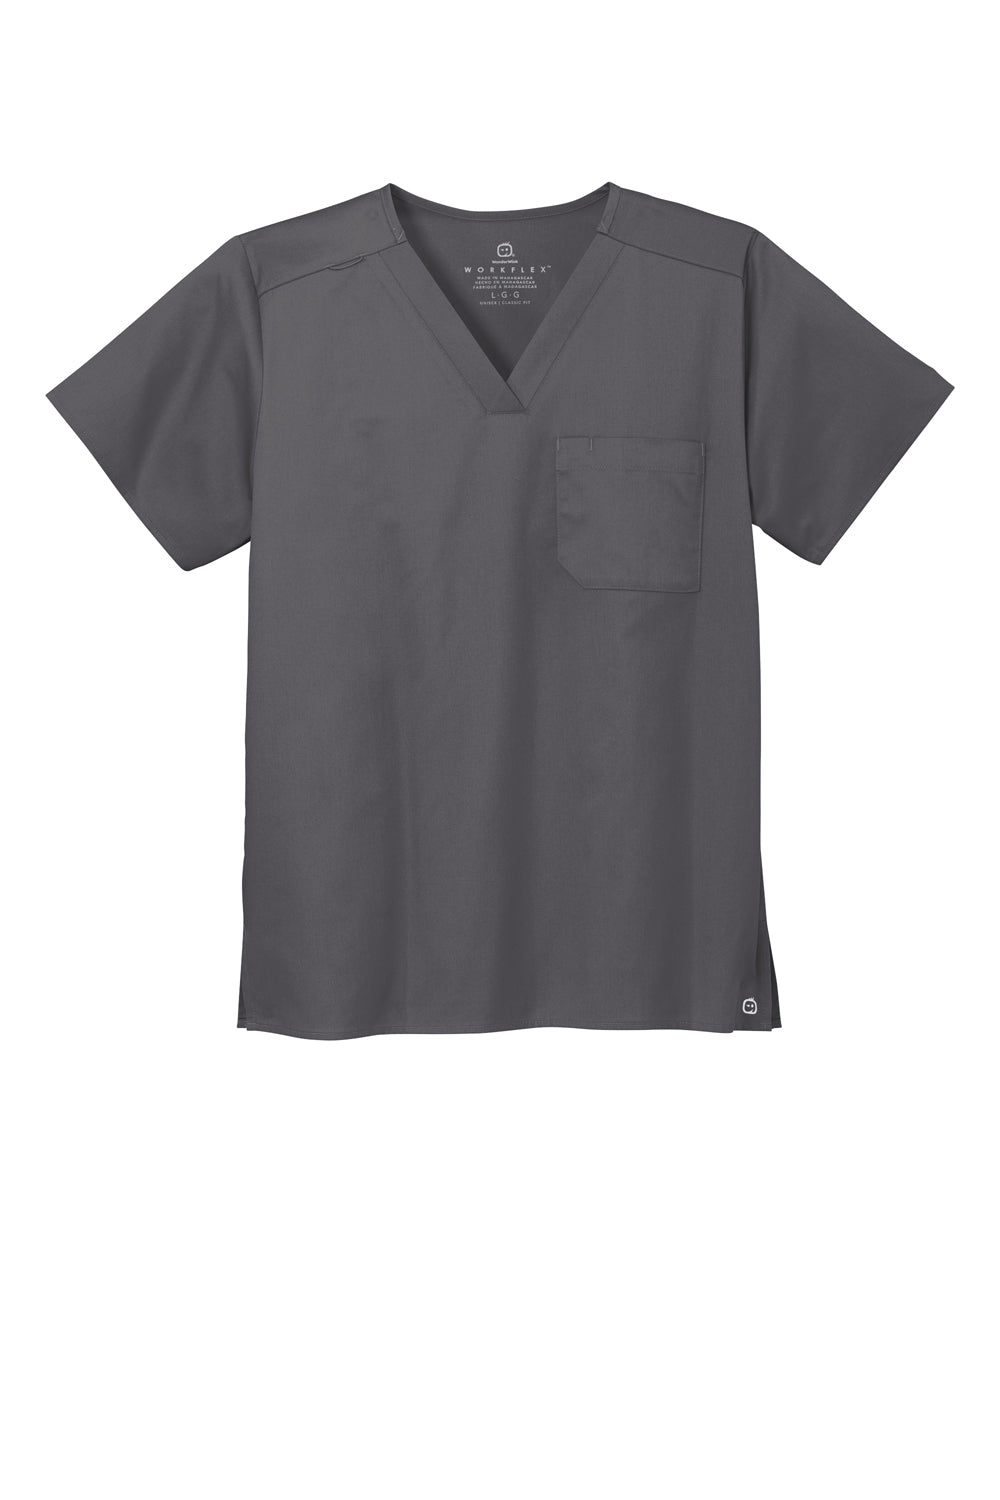 Wonderwink WW3160 WorkFlex Short Sleeve V-Neck Shirt w/ Pocket Pewter Grey Flat Front